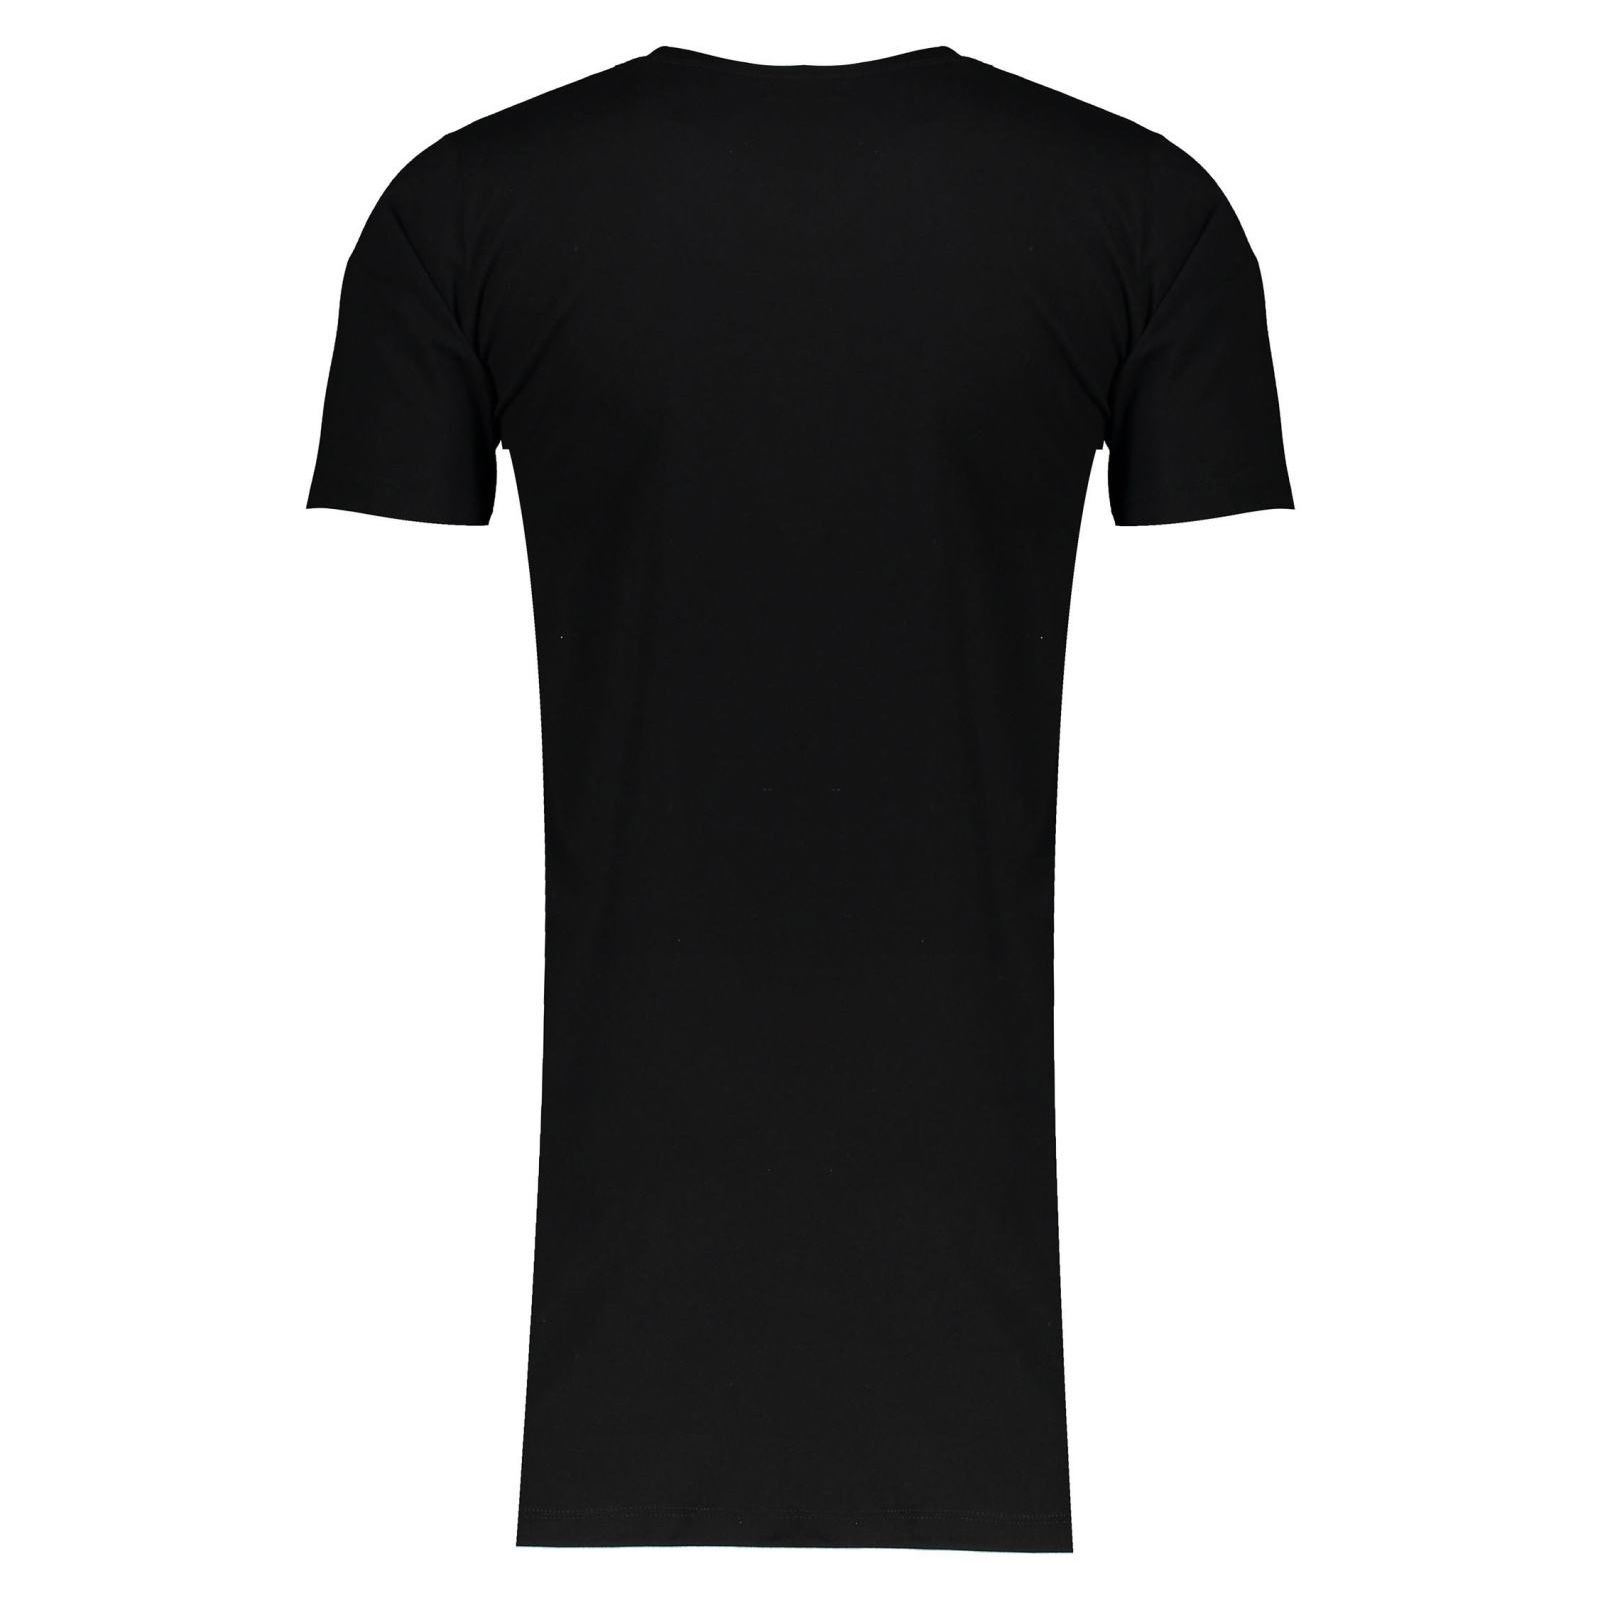 تی شرت آستین کوتاه مردانه یونیتی مدل Mns Bck -  - 3